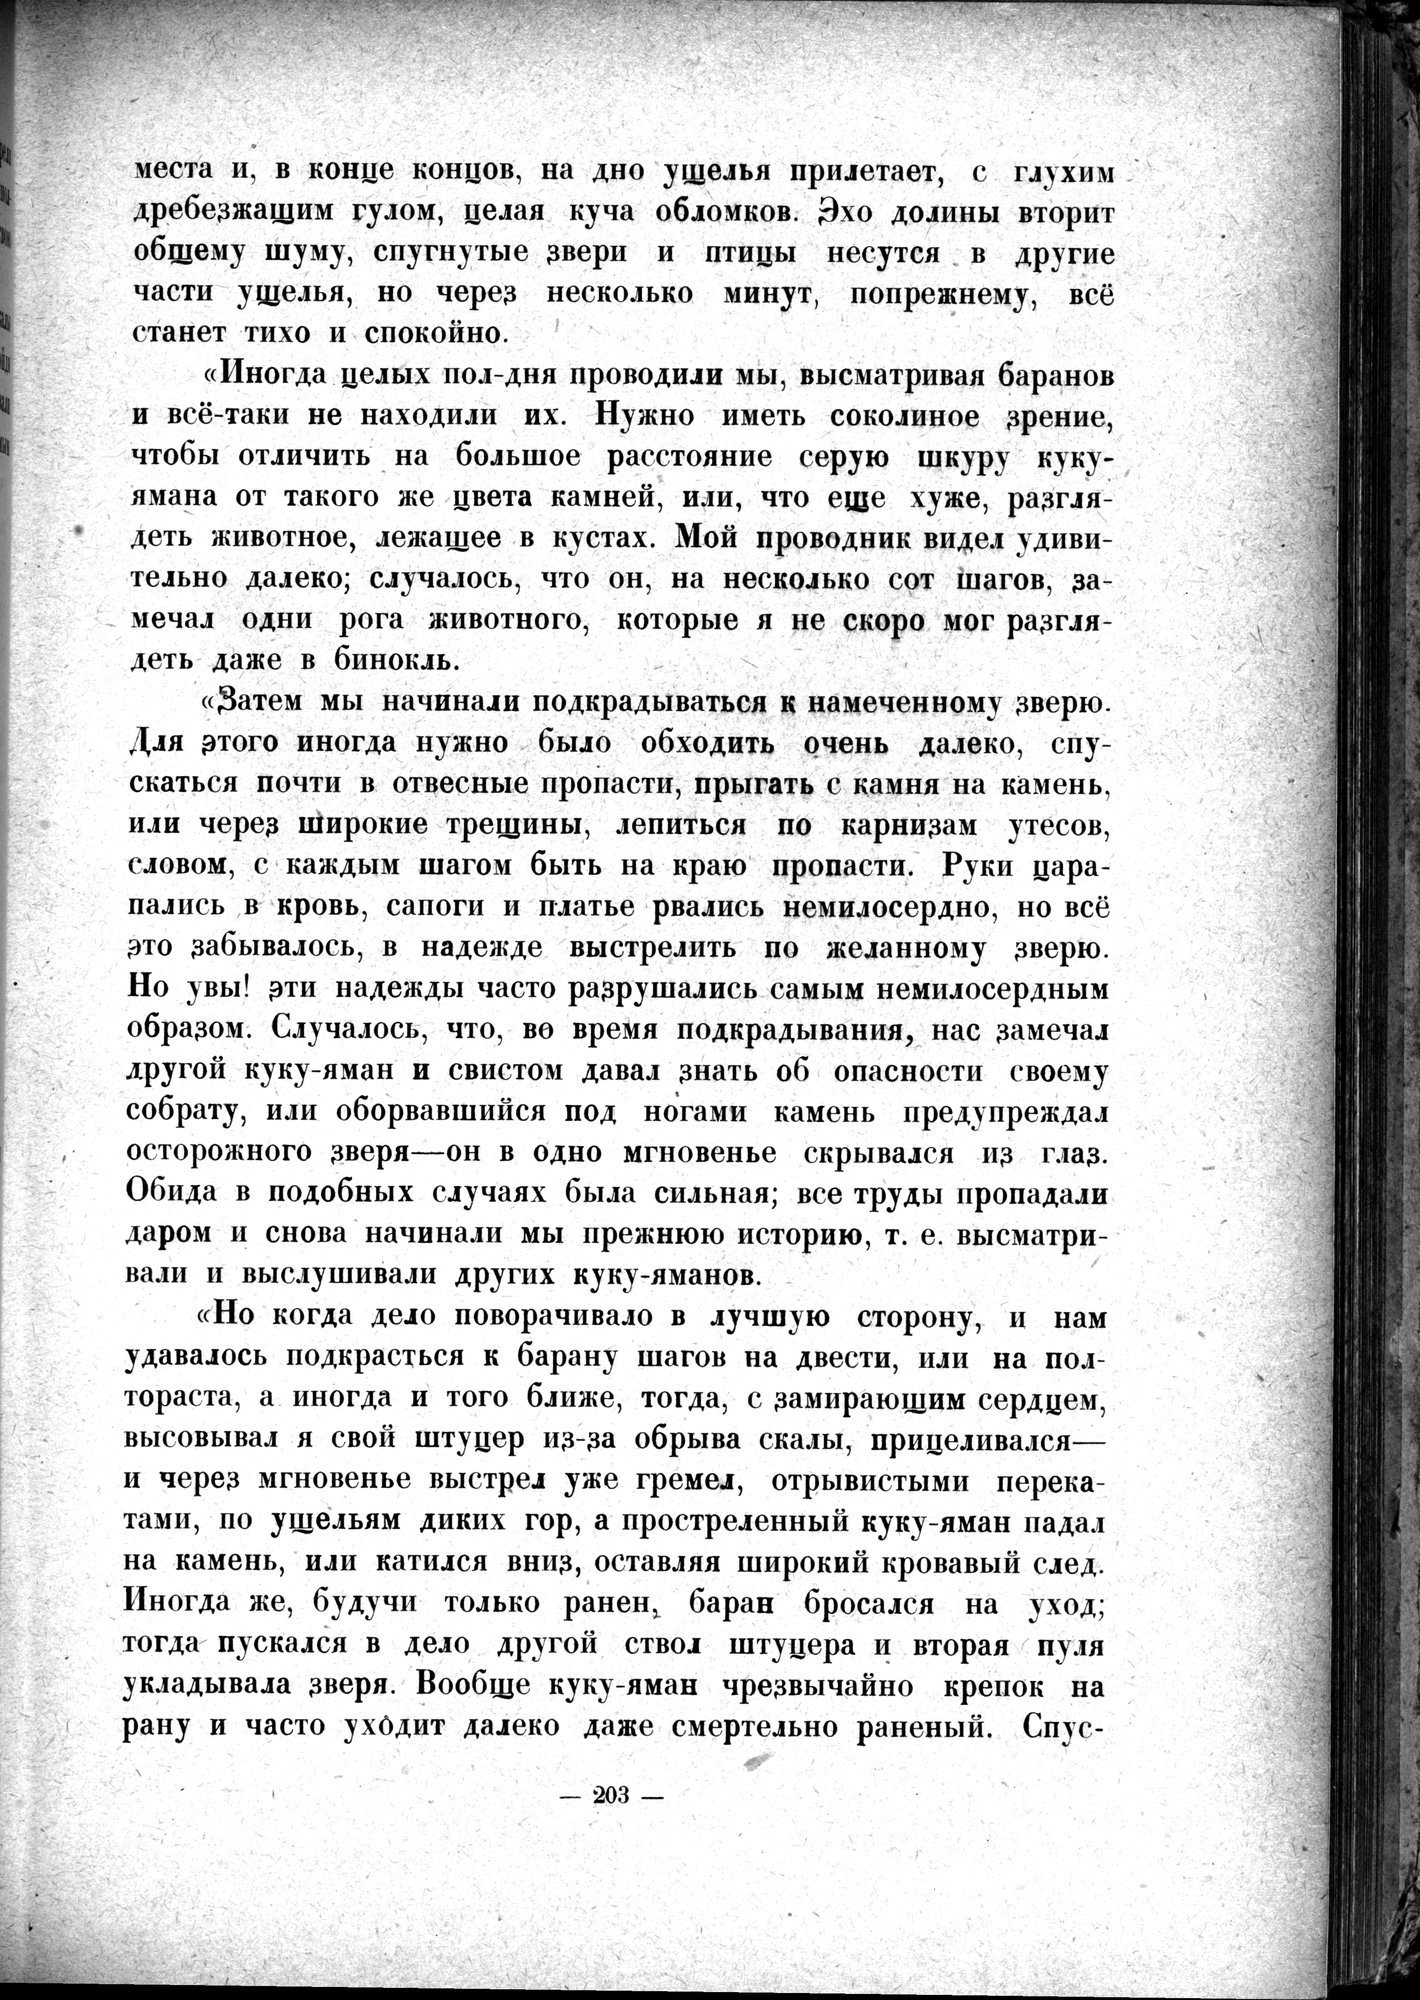 Mongoliya i Amdo i mertby gorod Khara-Khoto : vol.1 / Page 243 (Grayscale High Resolution Image)